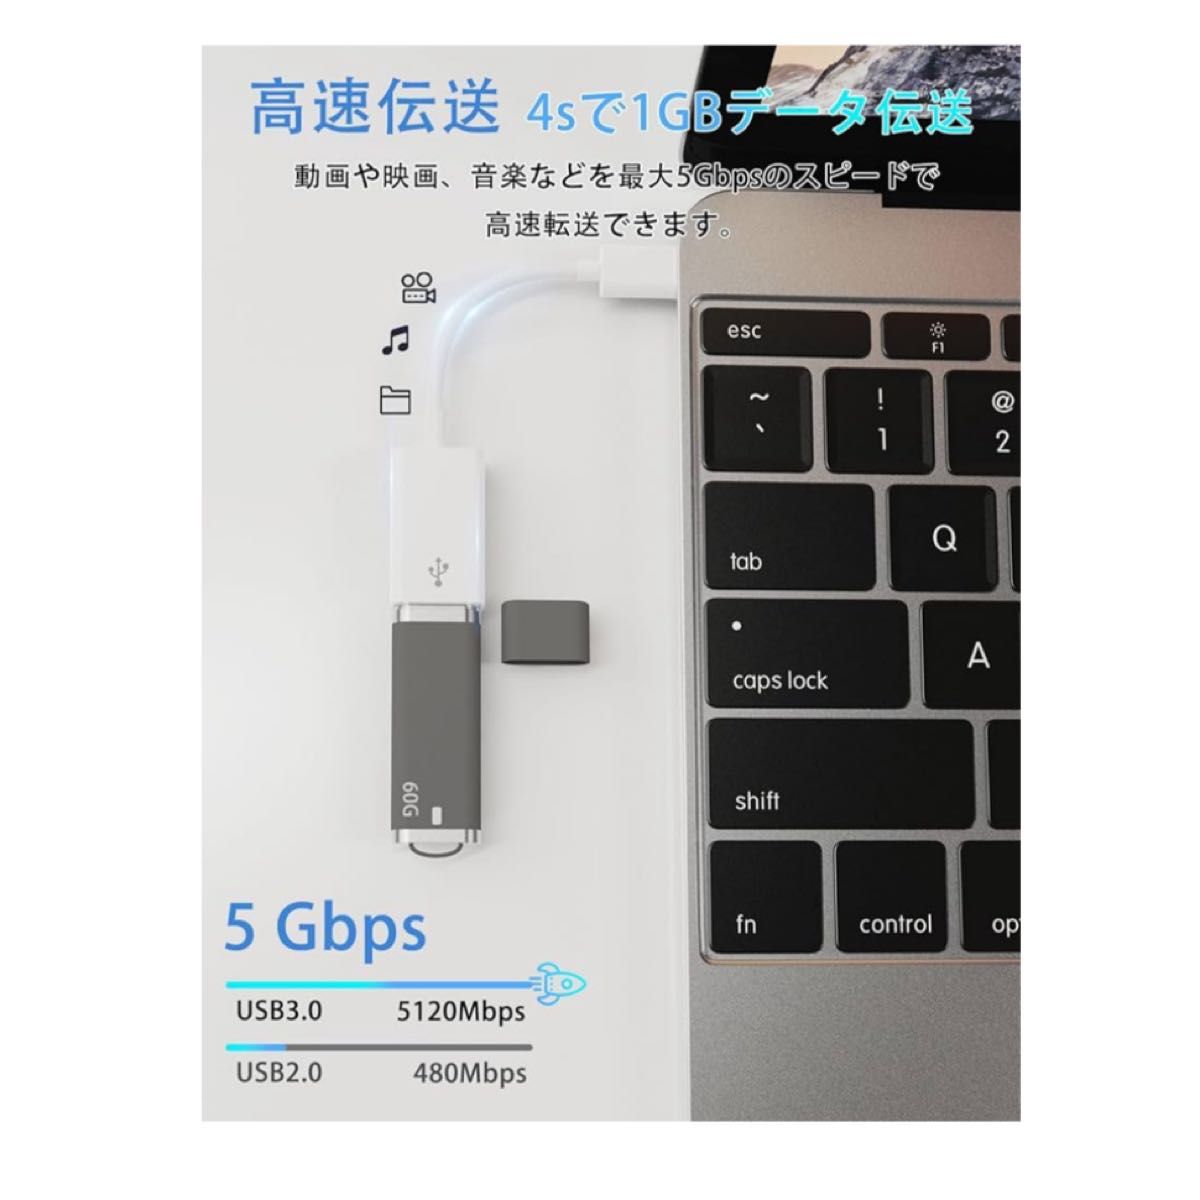 USB 変換アダプタ Type-C USB カメラアダプタ OTG変換ケーブル USB3.0 高速伝送 双方向 データ転送 写真